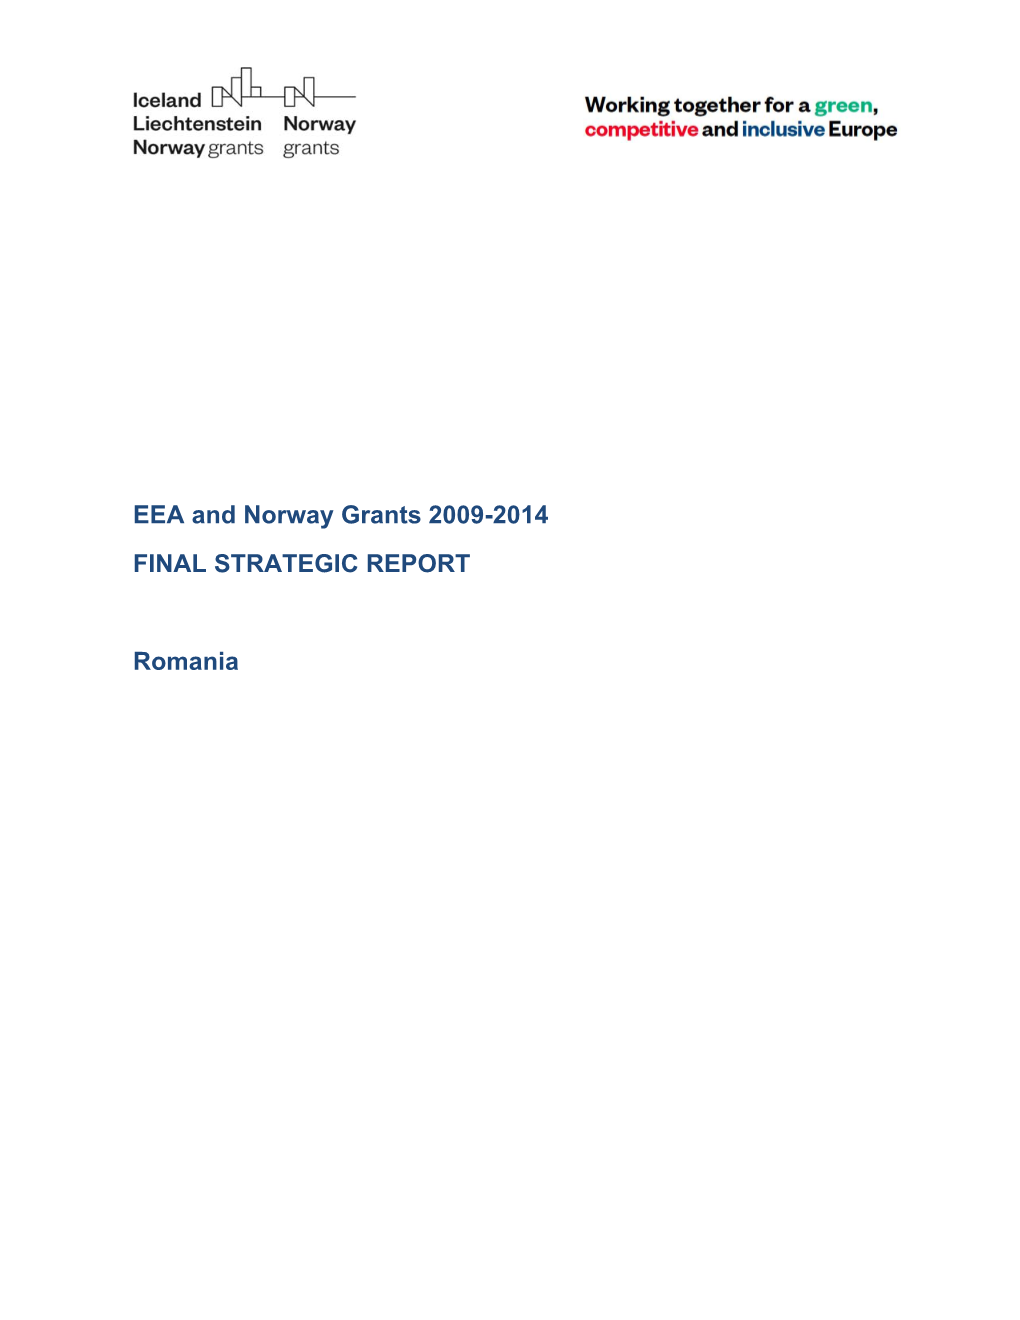 EEA and Norway Grants 2009-2014 FINAL STRATEGIC REPORT